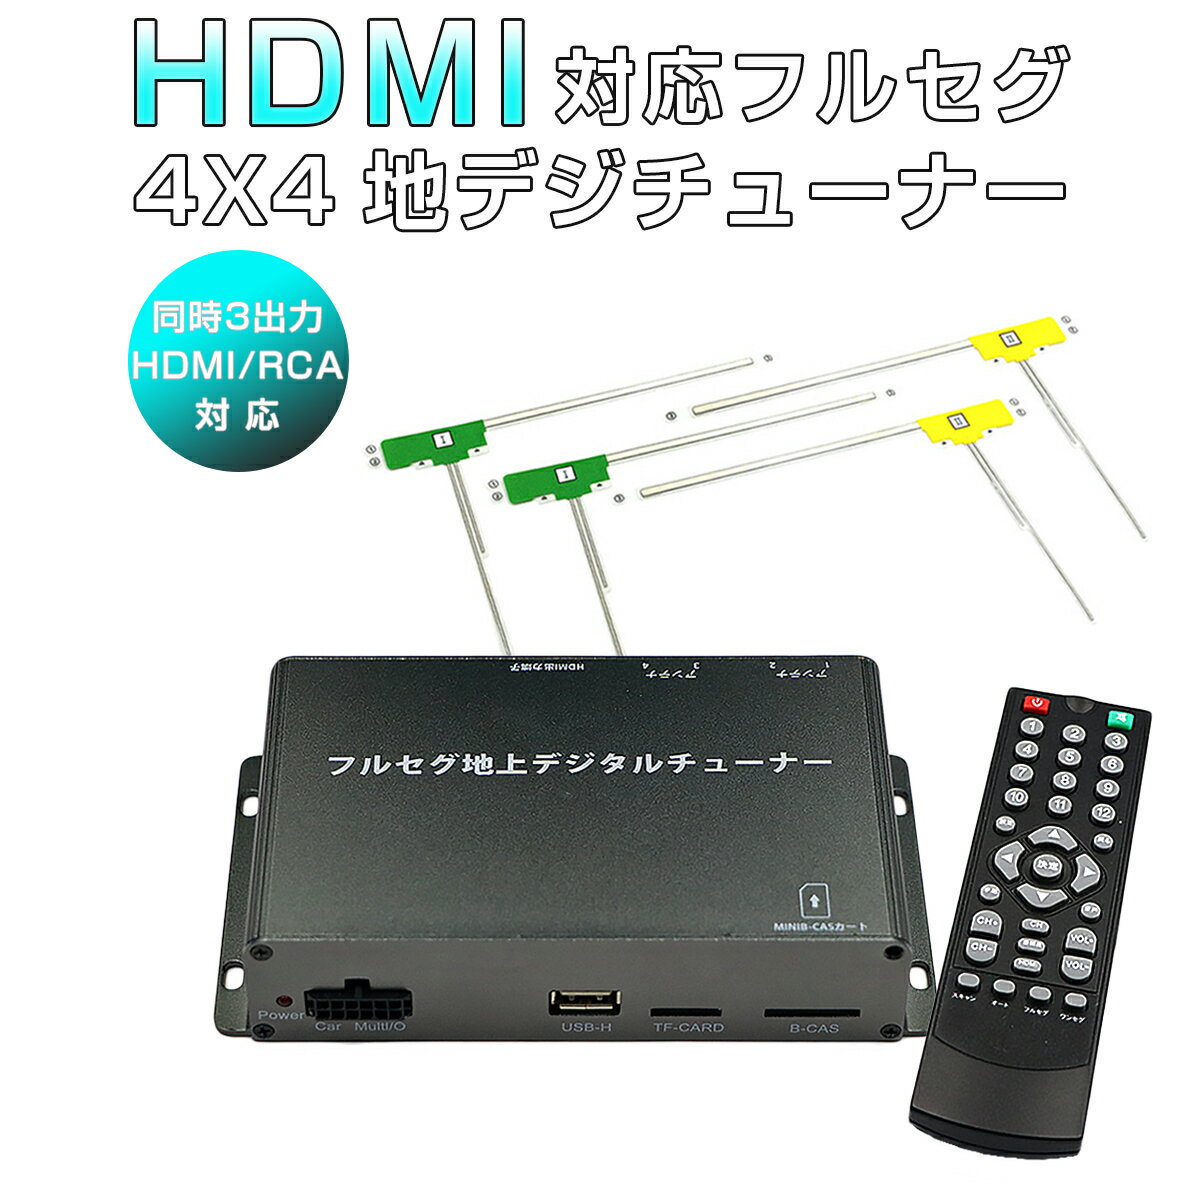 NISSAN用の非純正品 パオ 地デジチューナー カーナビ ワンセグ フルセグ HDMI 4x4 高性能 4チューナー 4アンテナ 自動切換 150km/hまで受信 高画質 古い車載TVやカーナビにも使える 12V/24V フィルムアンテナ miniB-CASカード付き 6ヶ月保証